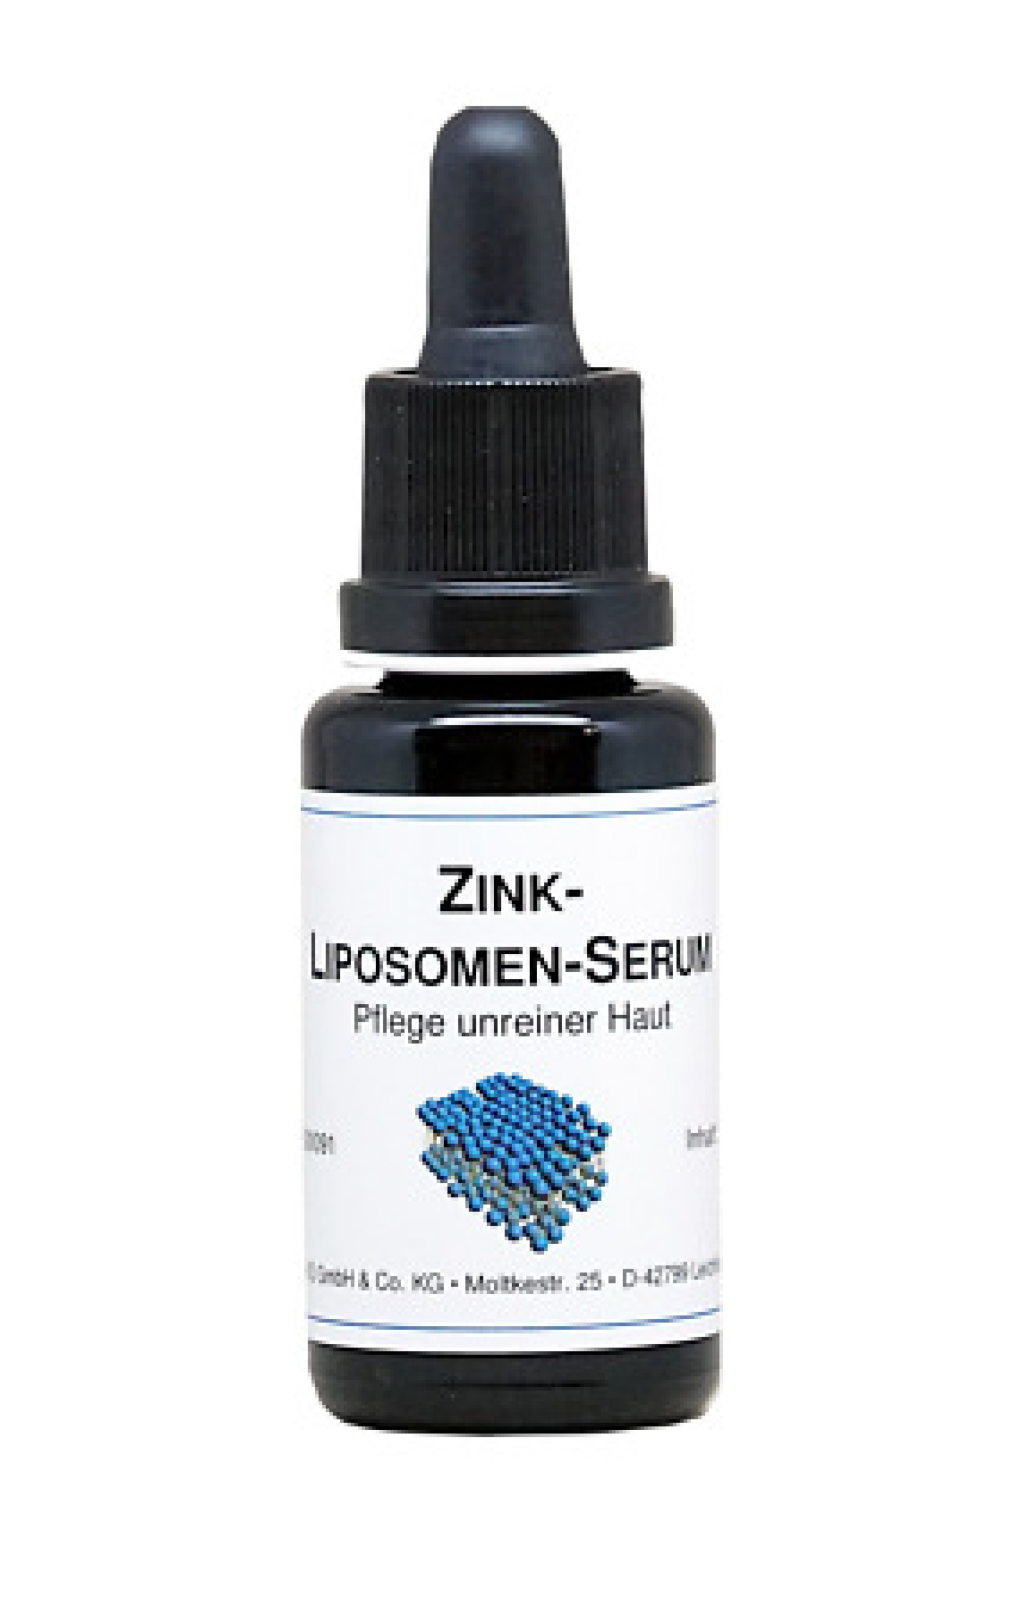 Zink-Liposomen-Serum 